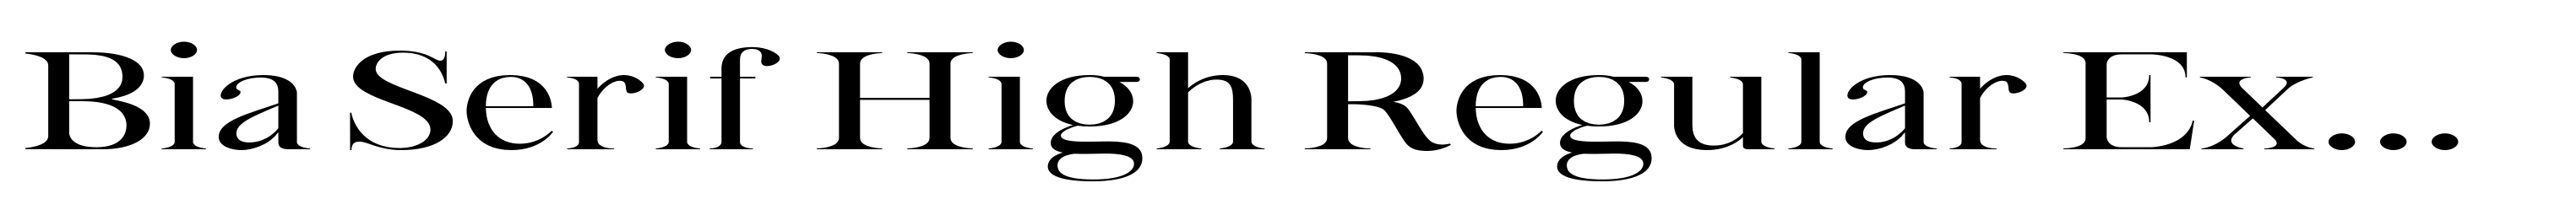 Bia Serif High Regular Expanded